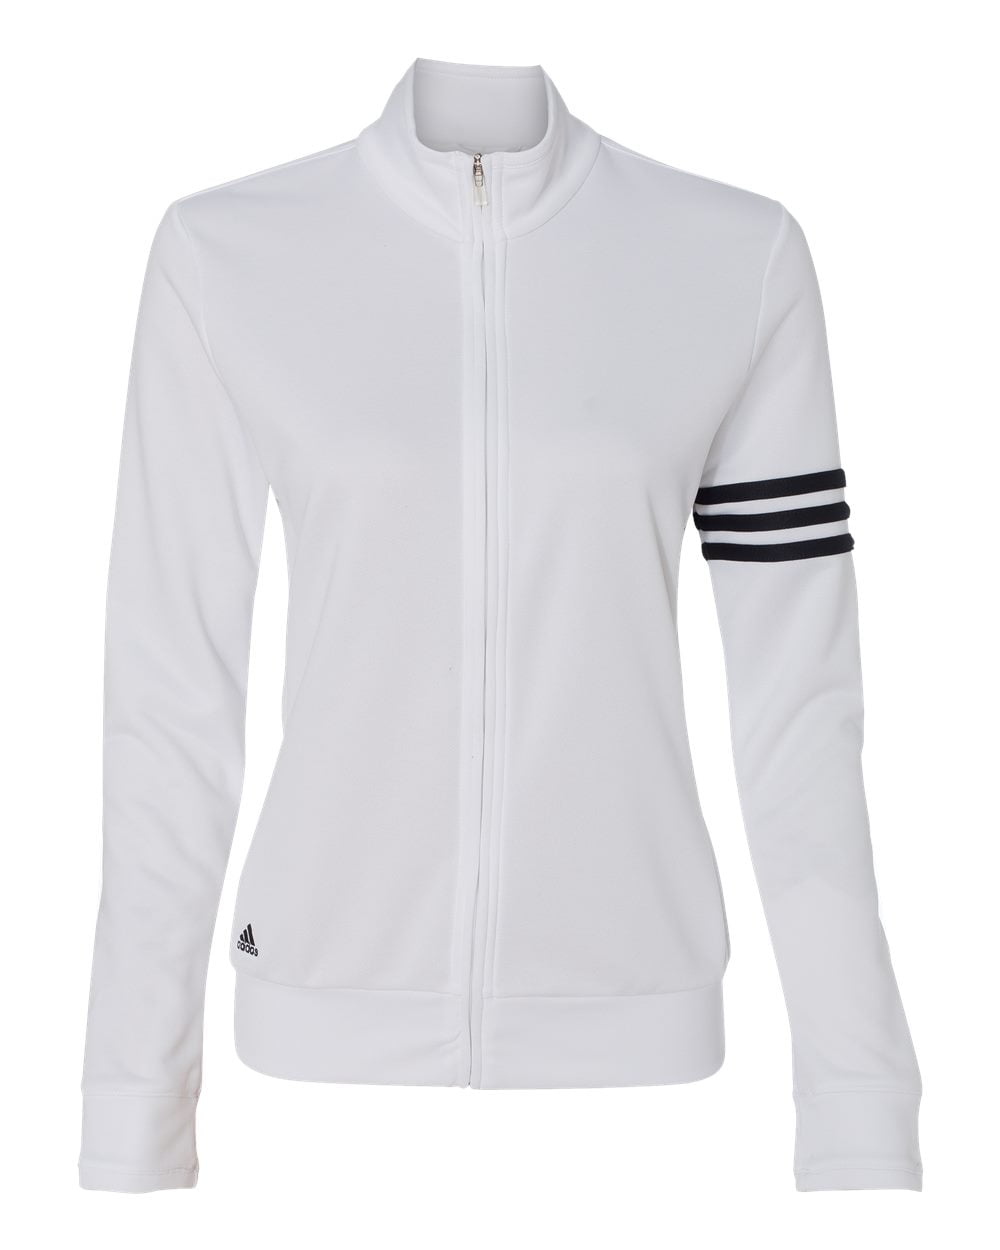 Adidas Golf Women's ClimaLite 3-Stripes French Terry Full-Zip Jacket -  Walmart.com